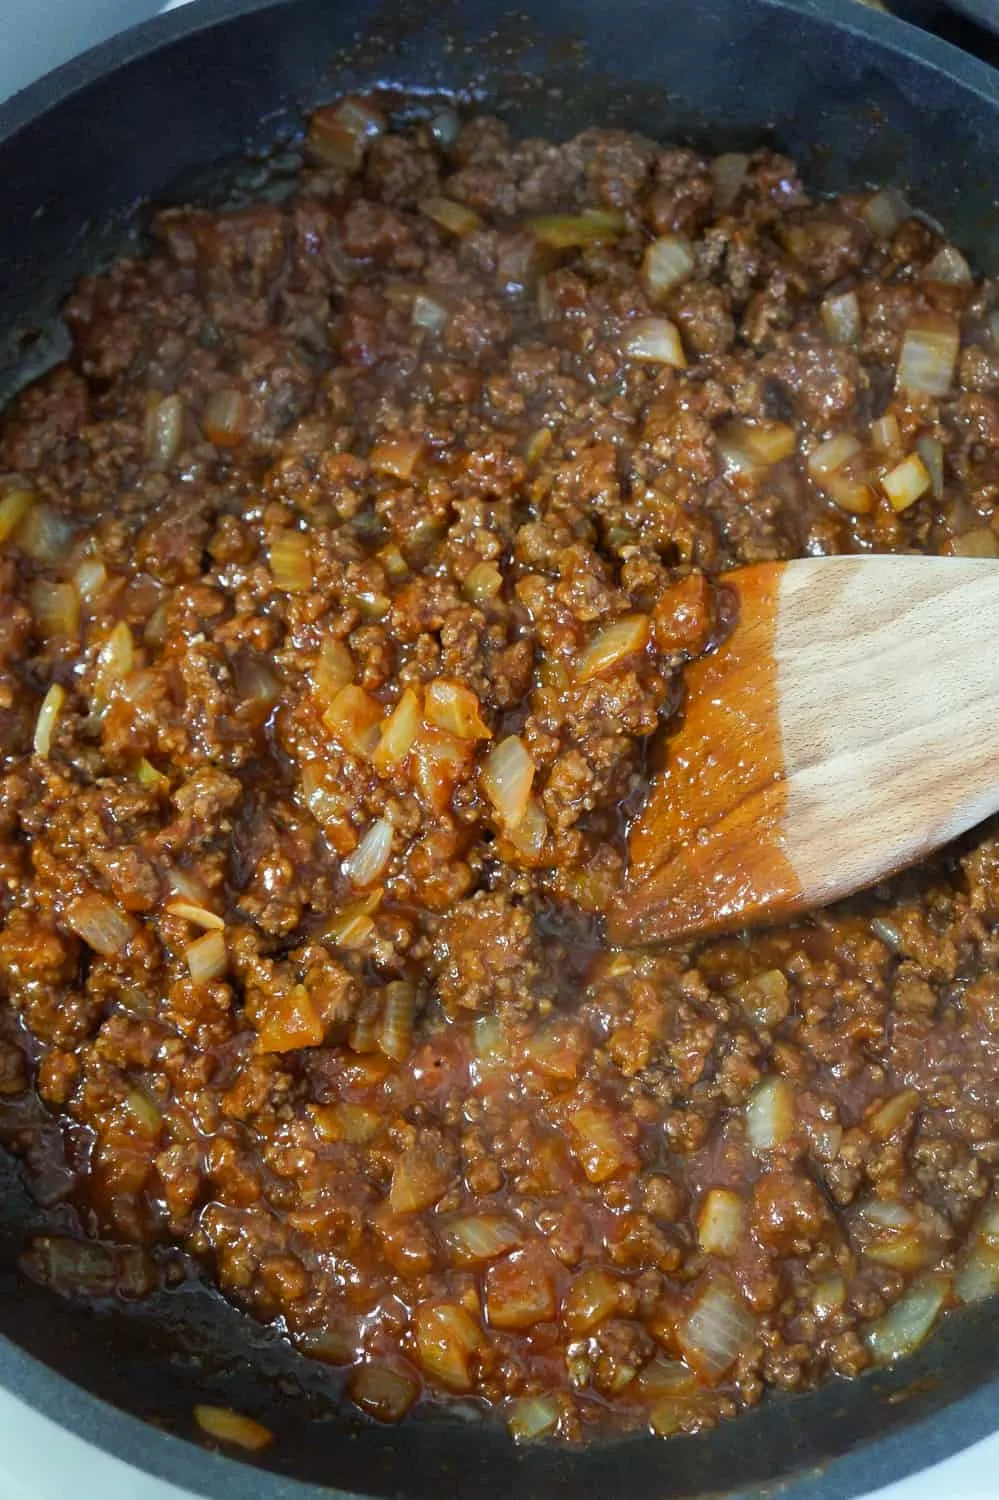 sloppy joe mixture in a frying pan